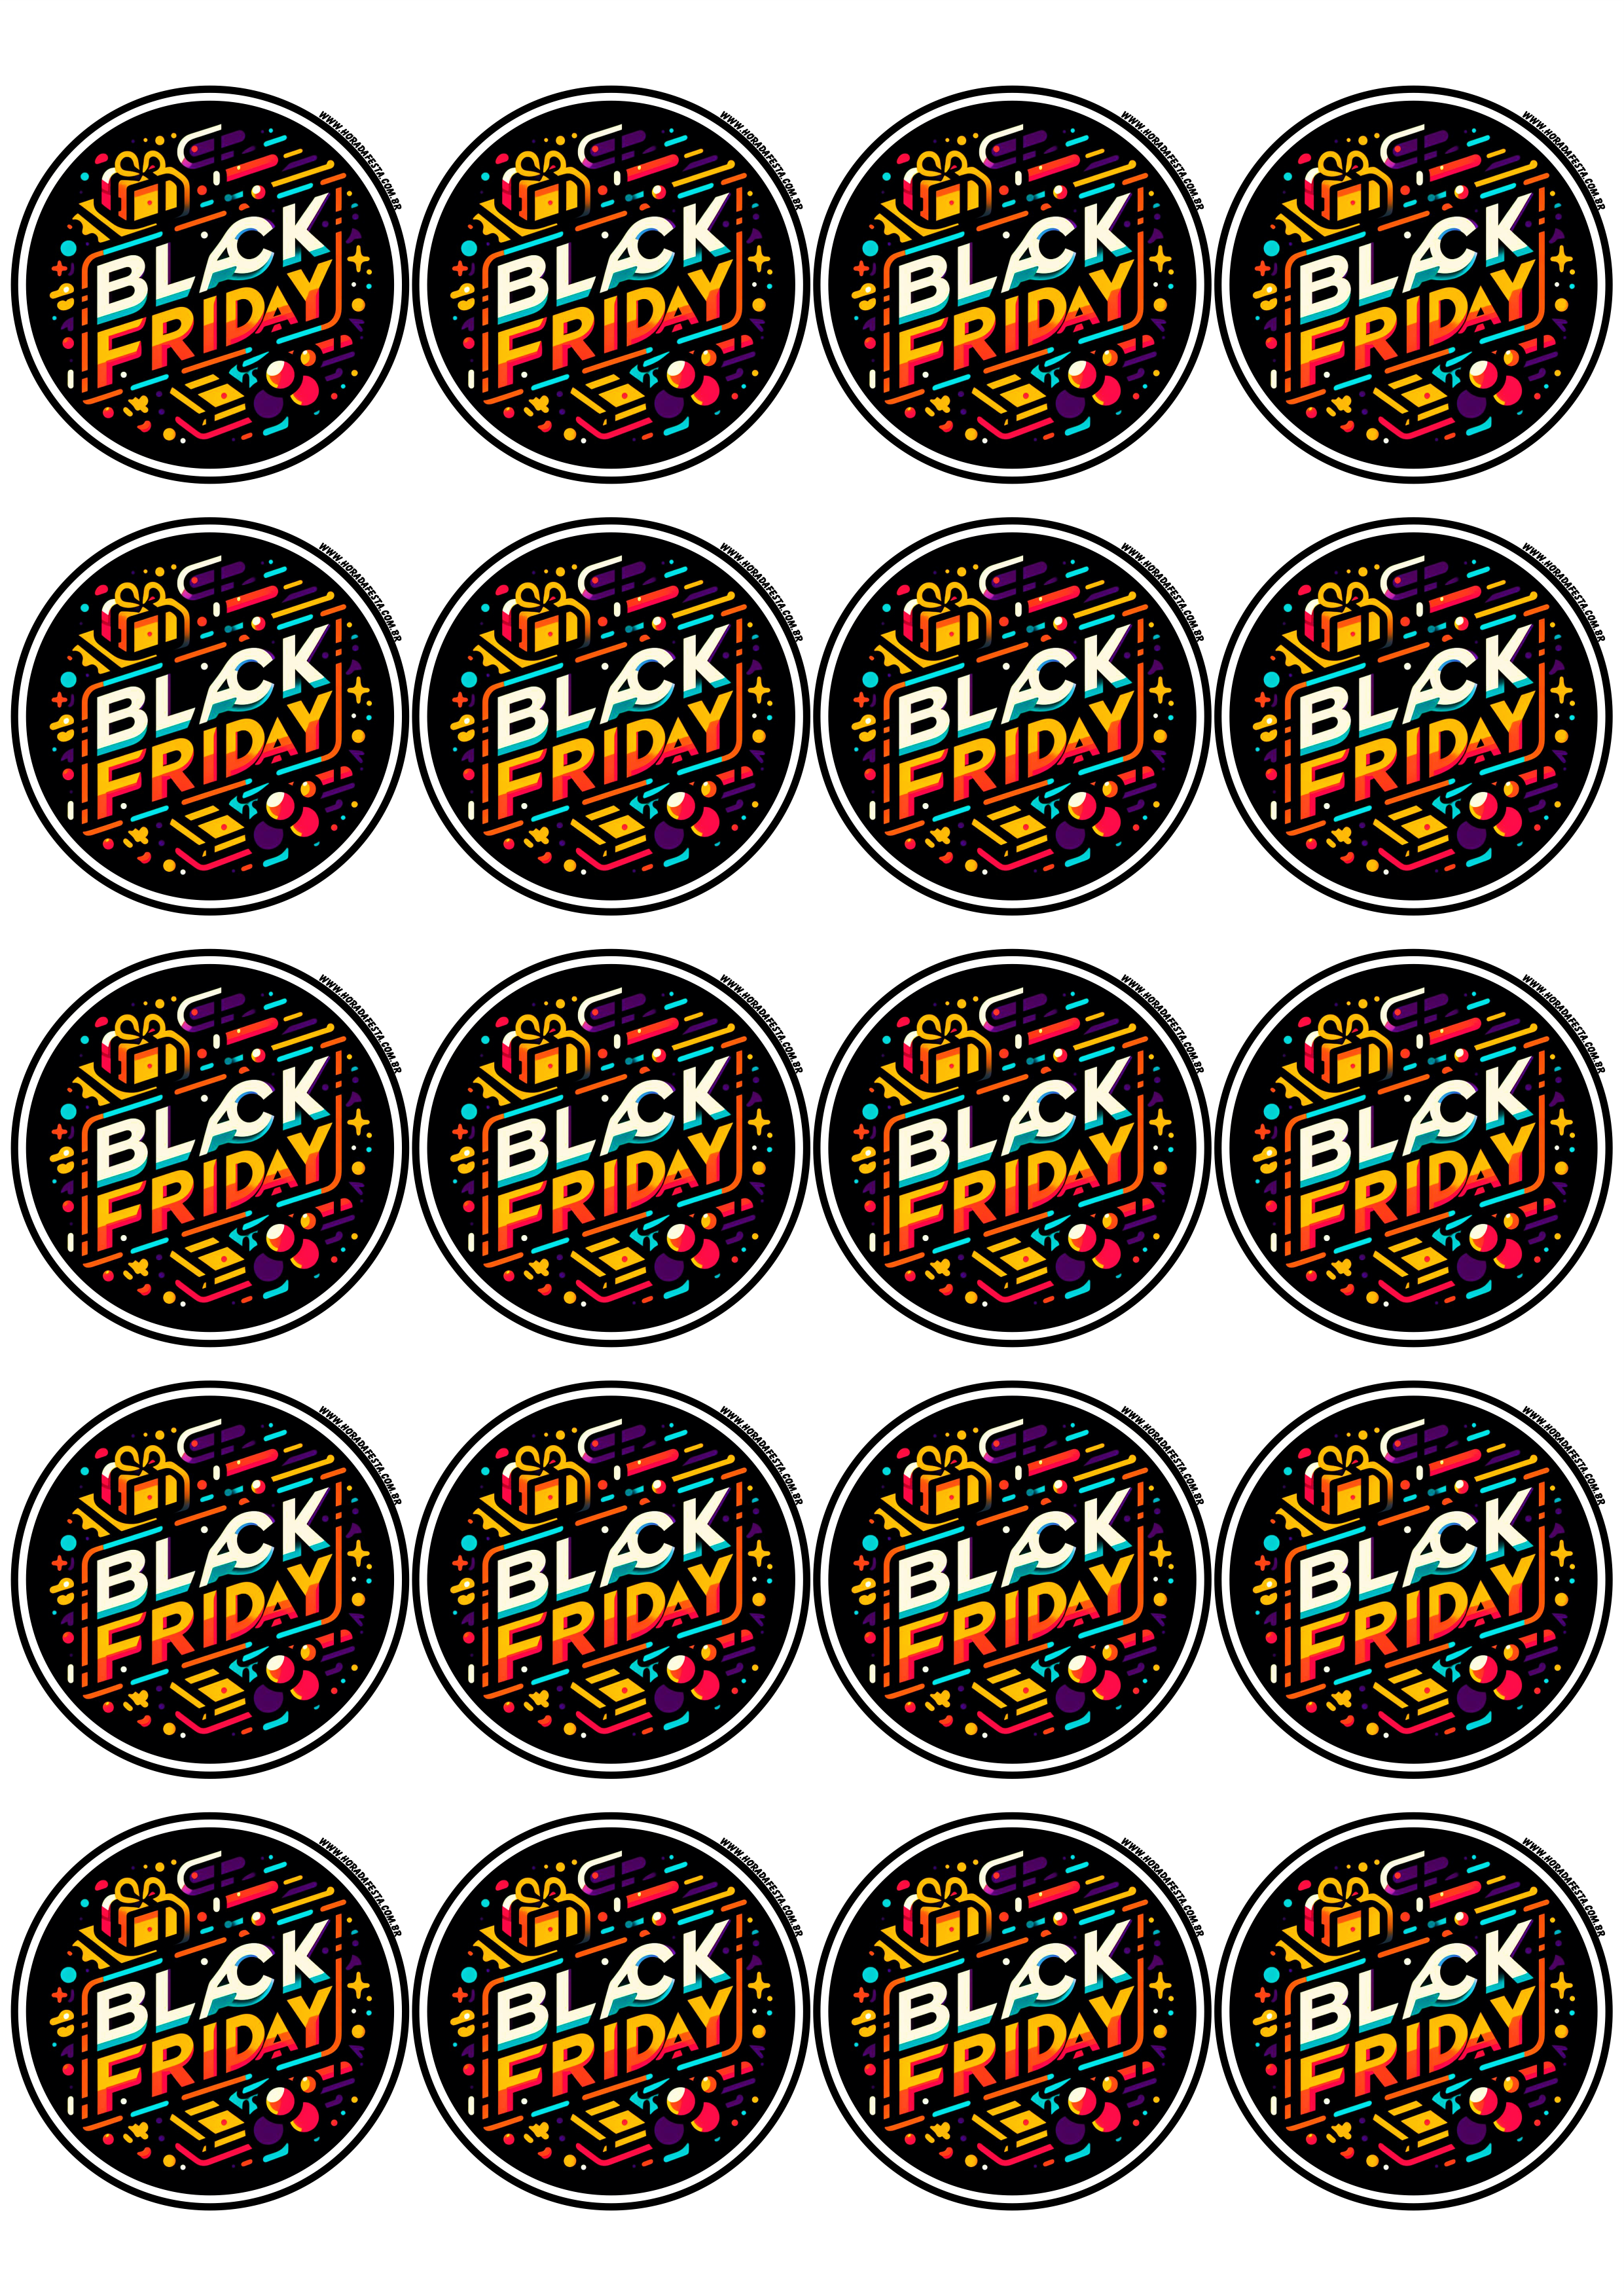 Black Friday adesivo redondo tag sticker artes gráficas 20 imagens png